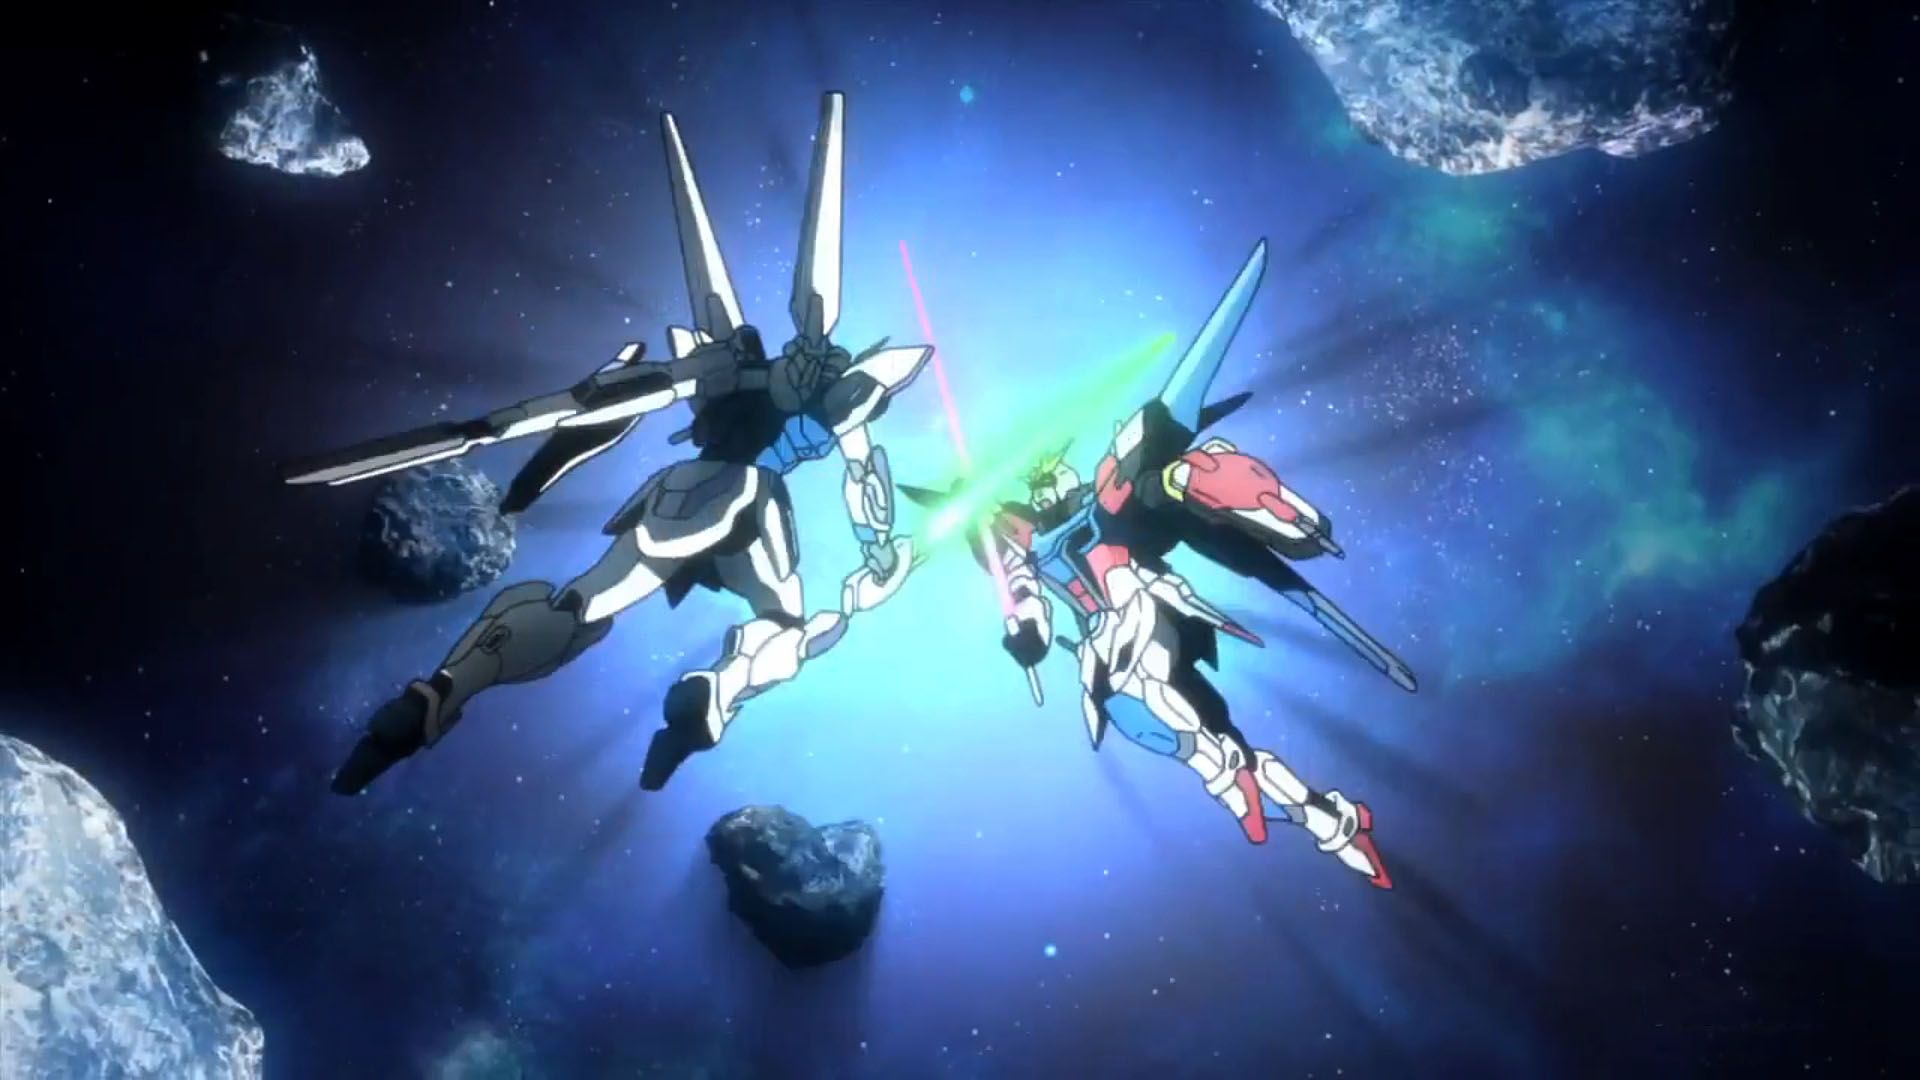 Gundam Build Fighters: Two Gunpla in Battle